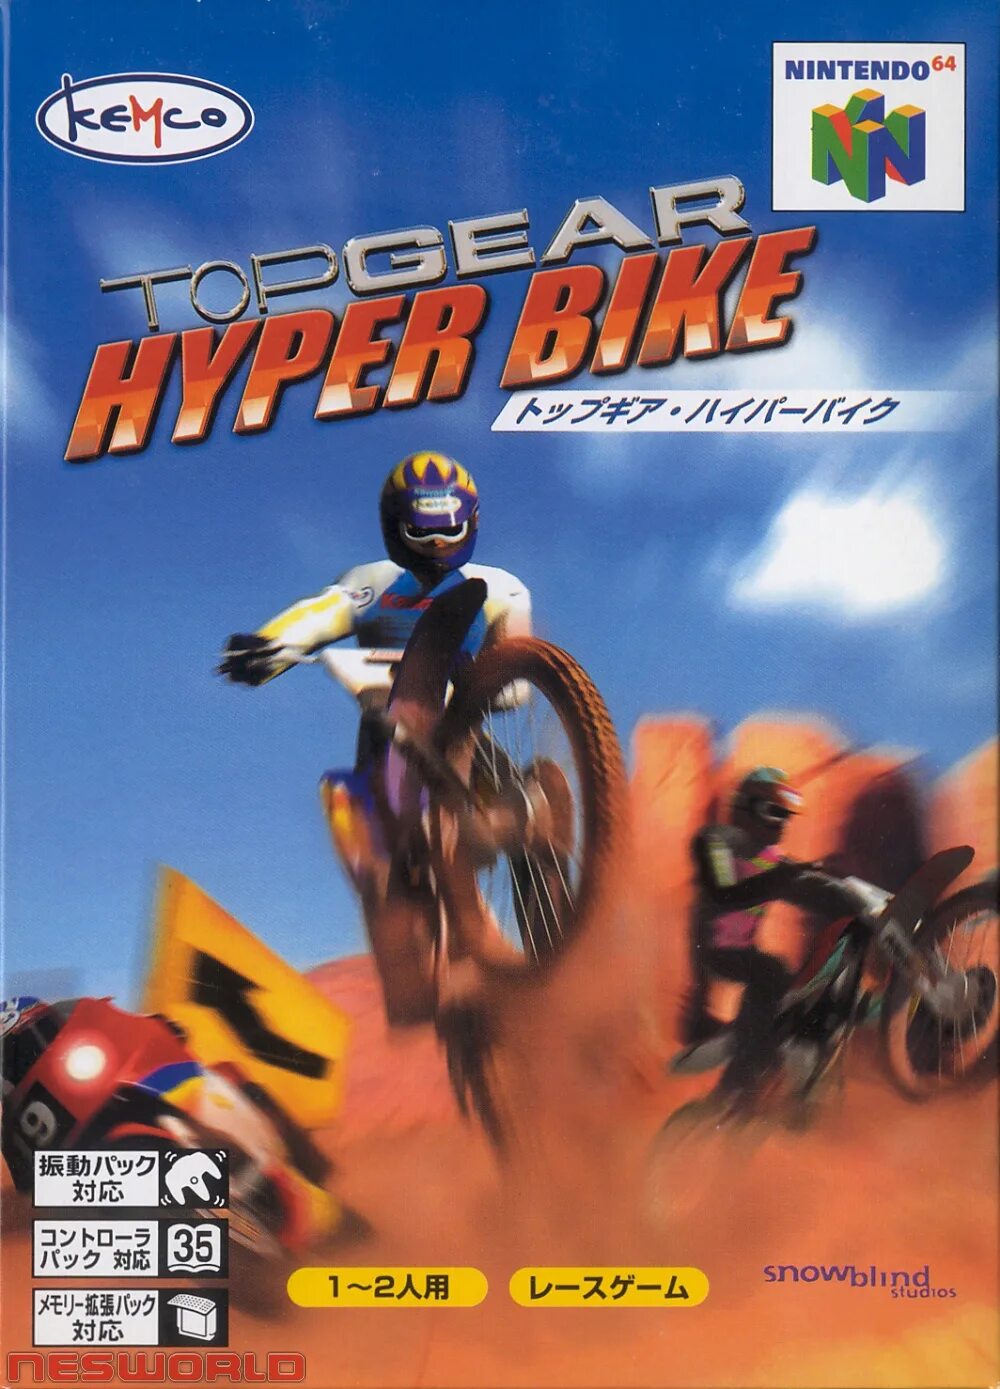 Nintendo 64 roms. Top Gear Hyper Bike Turbo Nintendo 64. Top Gear Overdrive Nintendo 64. Нинтендо 64 игры.